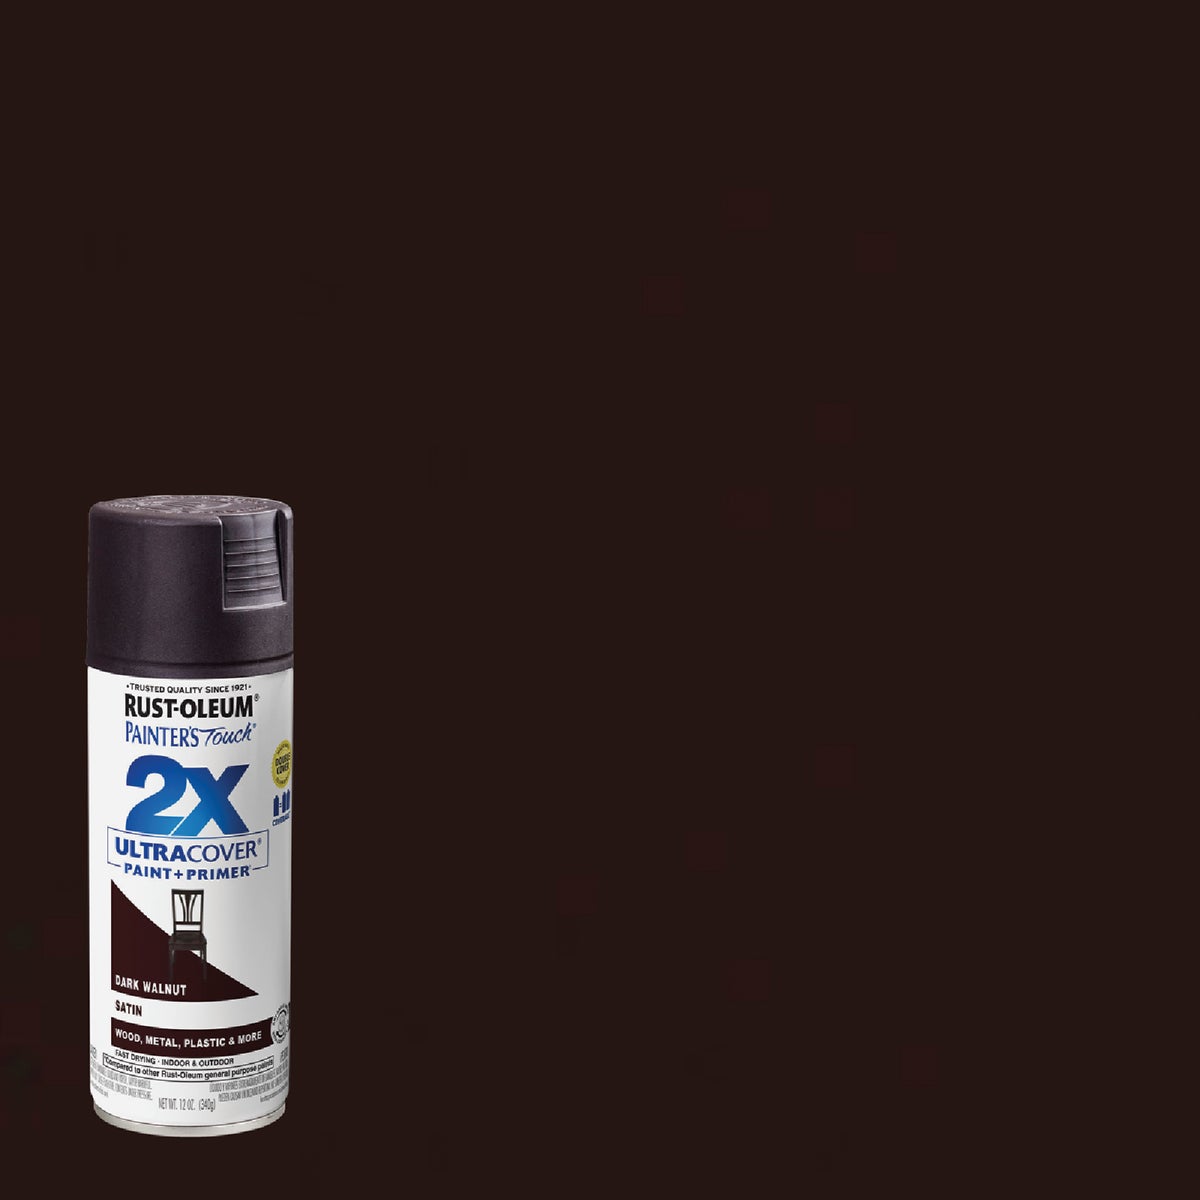 Rust-Oleum Painter's Touch 2X Ultra Cover 12 Oz. Satin Paint + Primer Spray Paint, Dark Walnut